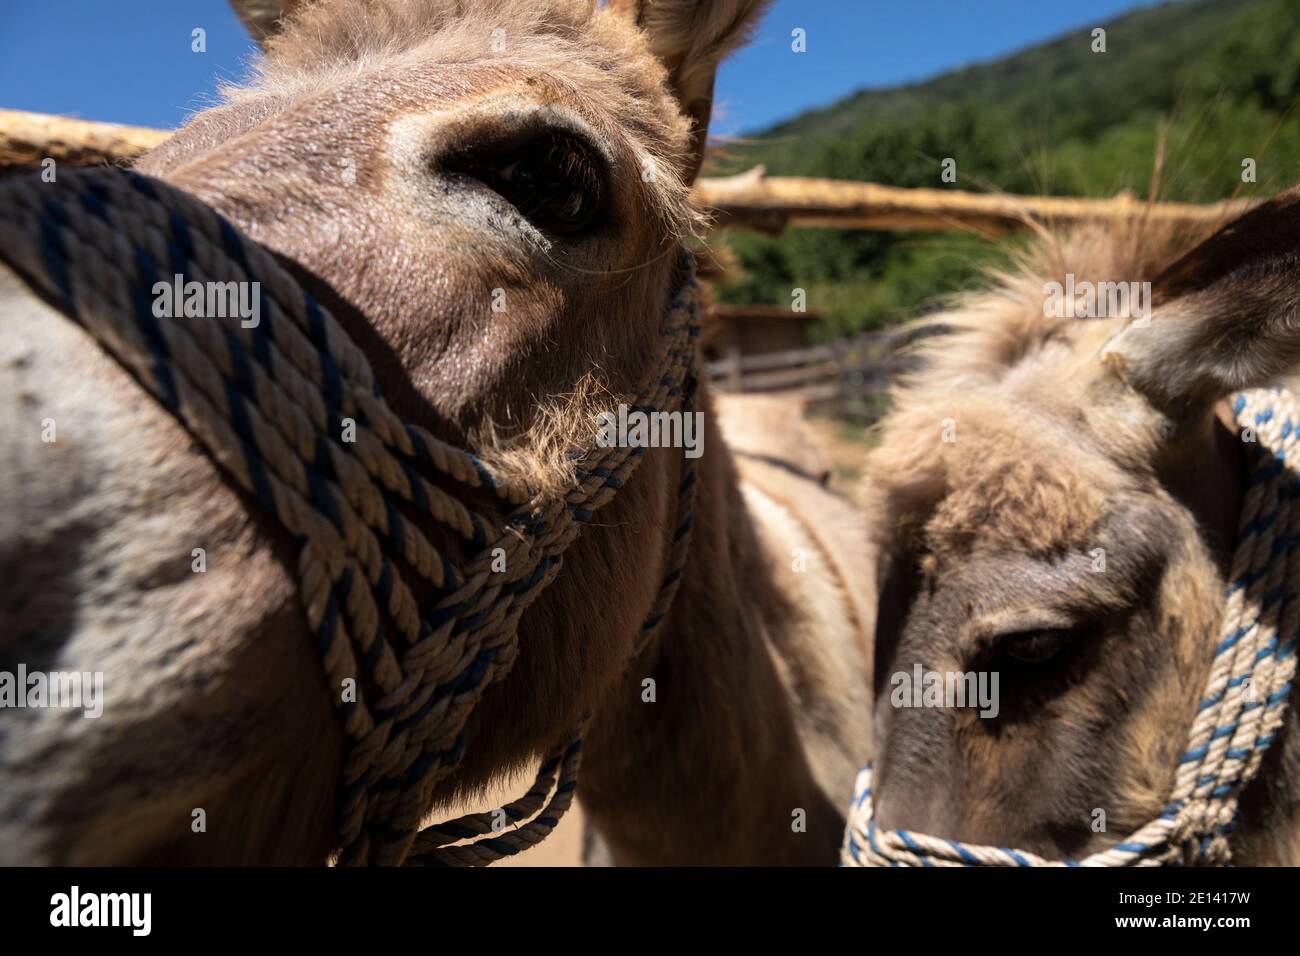 Donkey in a farm Stock Photo